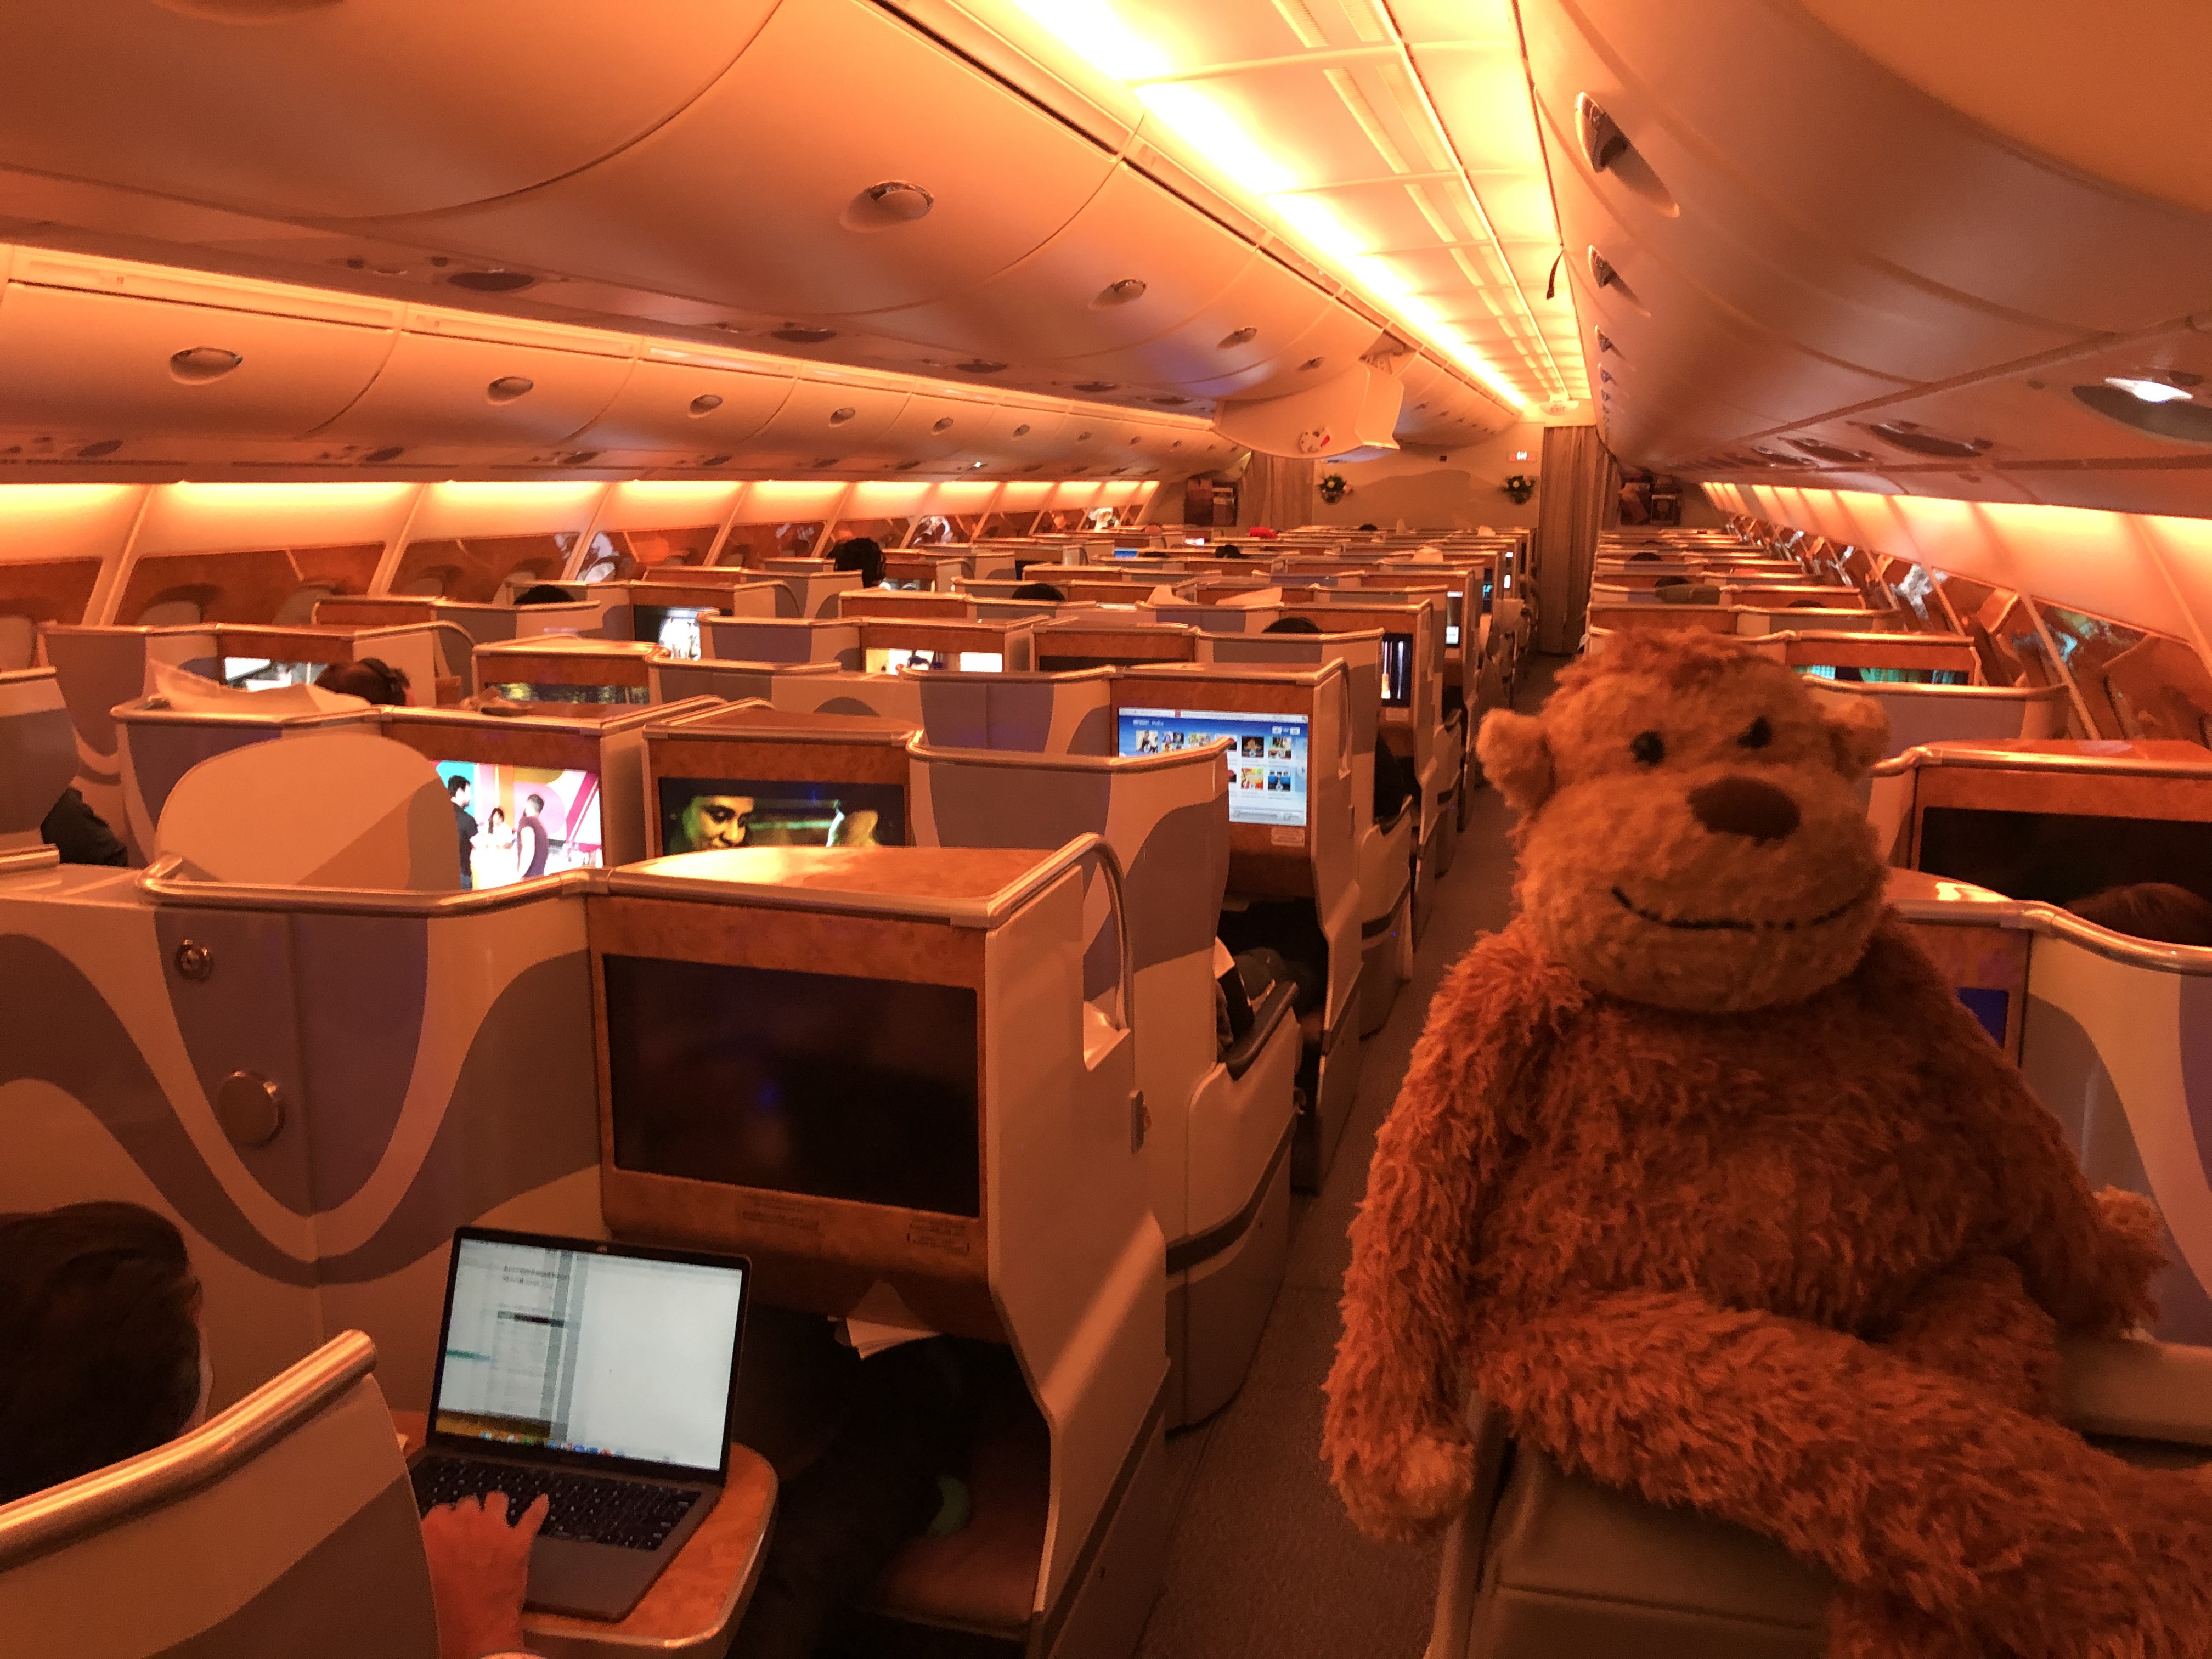 a stuffed animal sitting on an airplane